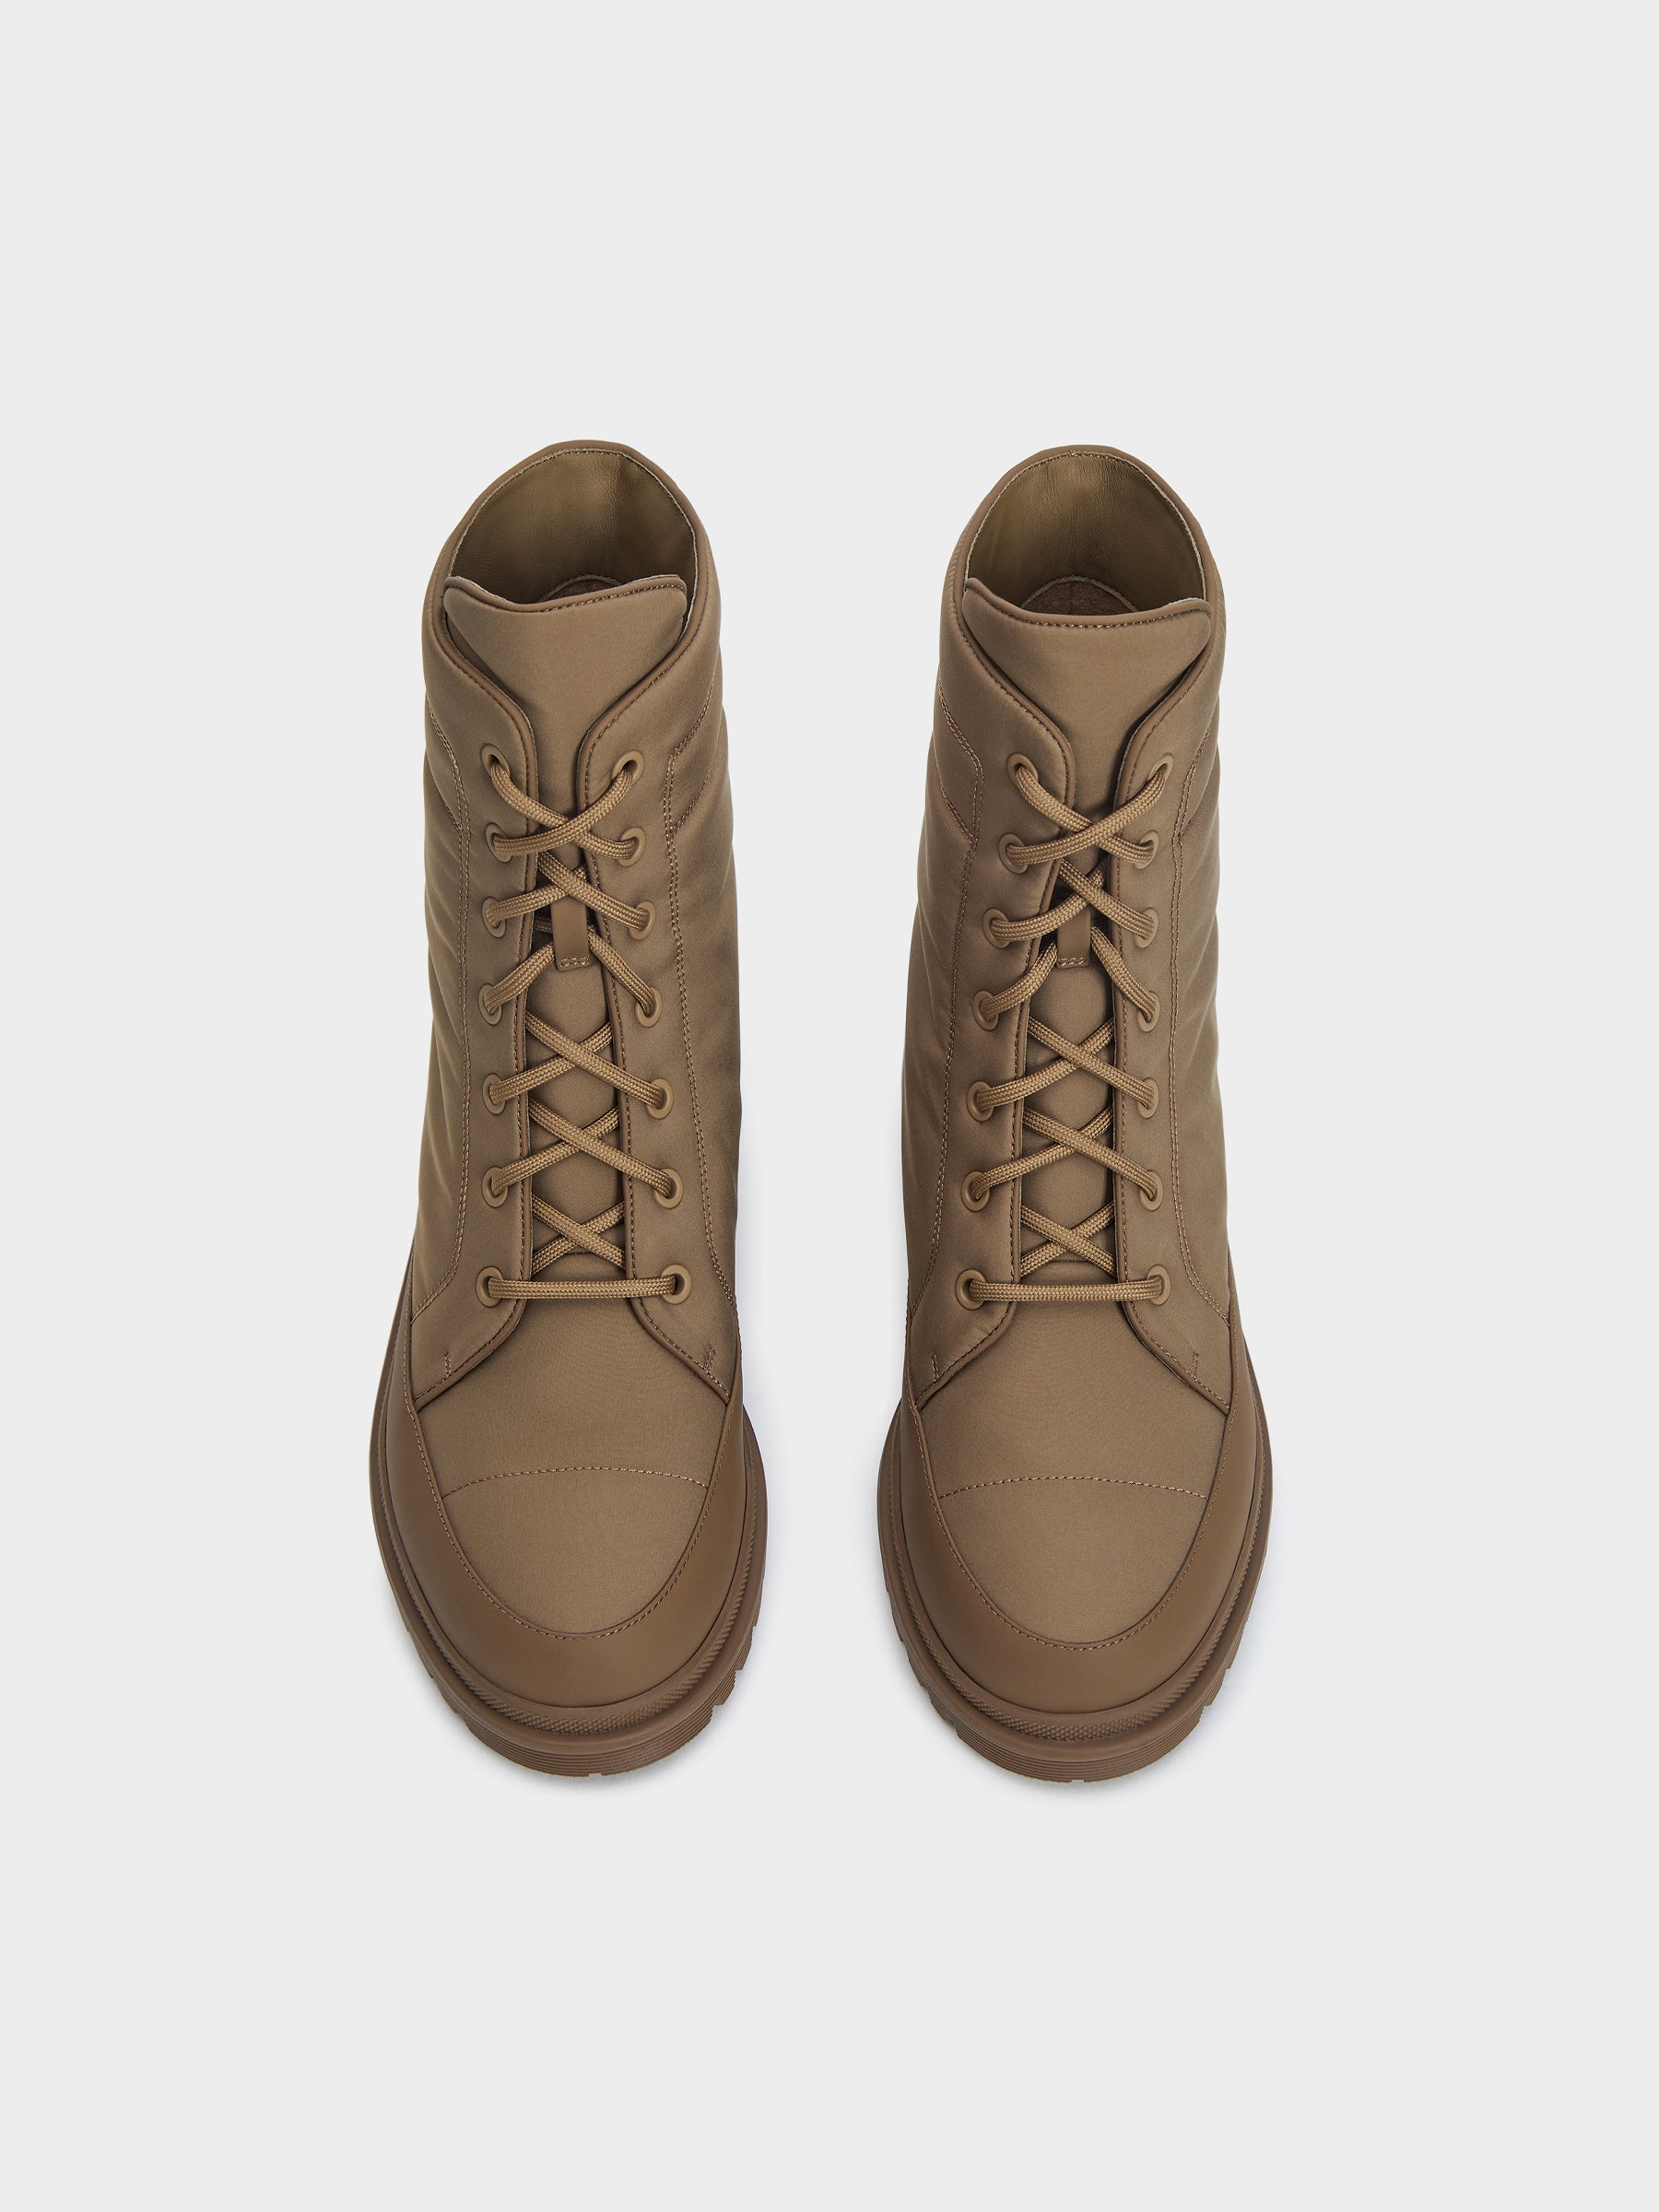 Nylon boots